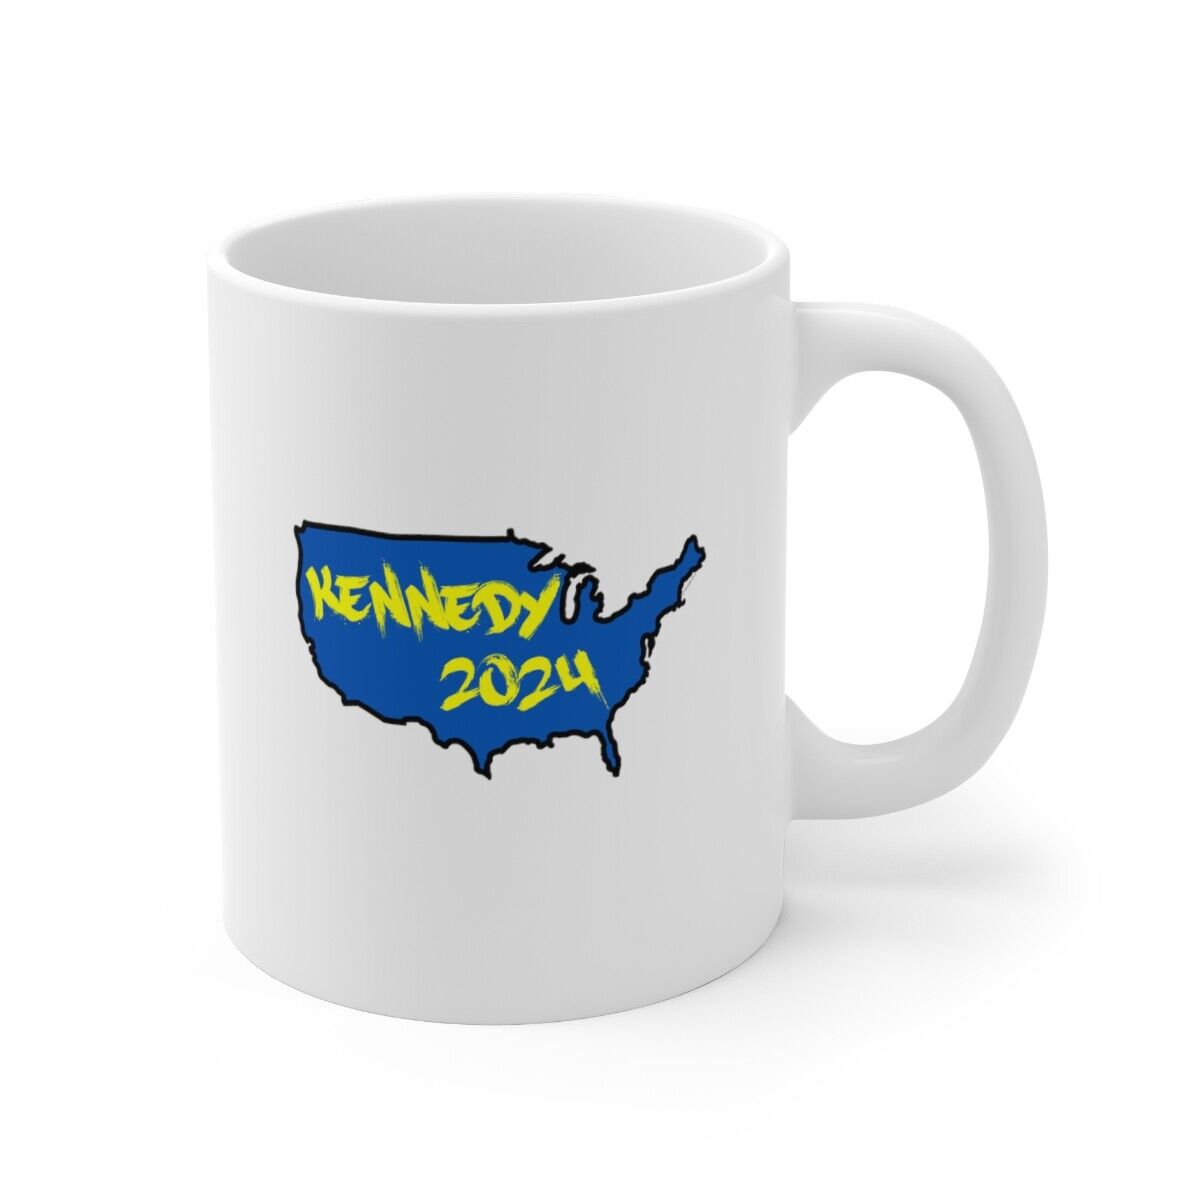 Cool Kennedy 2024 Coffee Mug Drink To RFK Jr Cool Graffiti on America